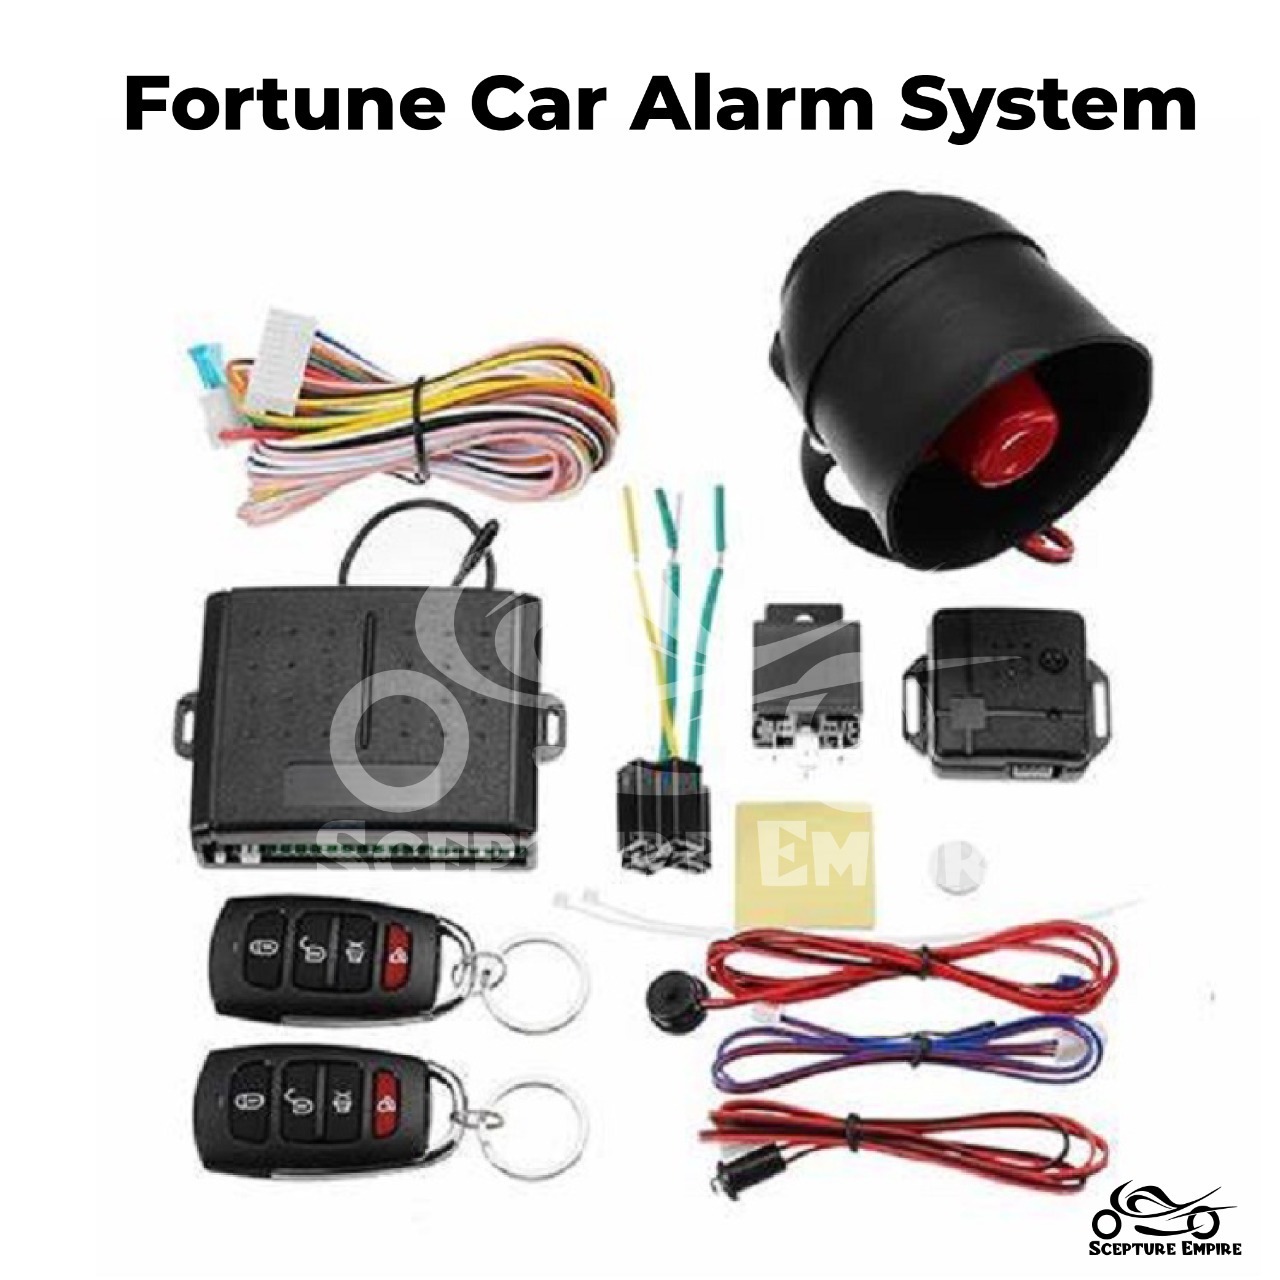 Fortune Car Alarm System